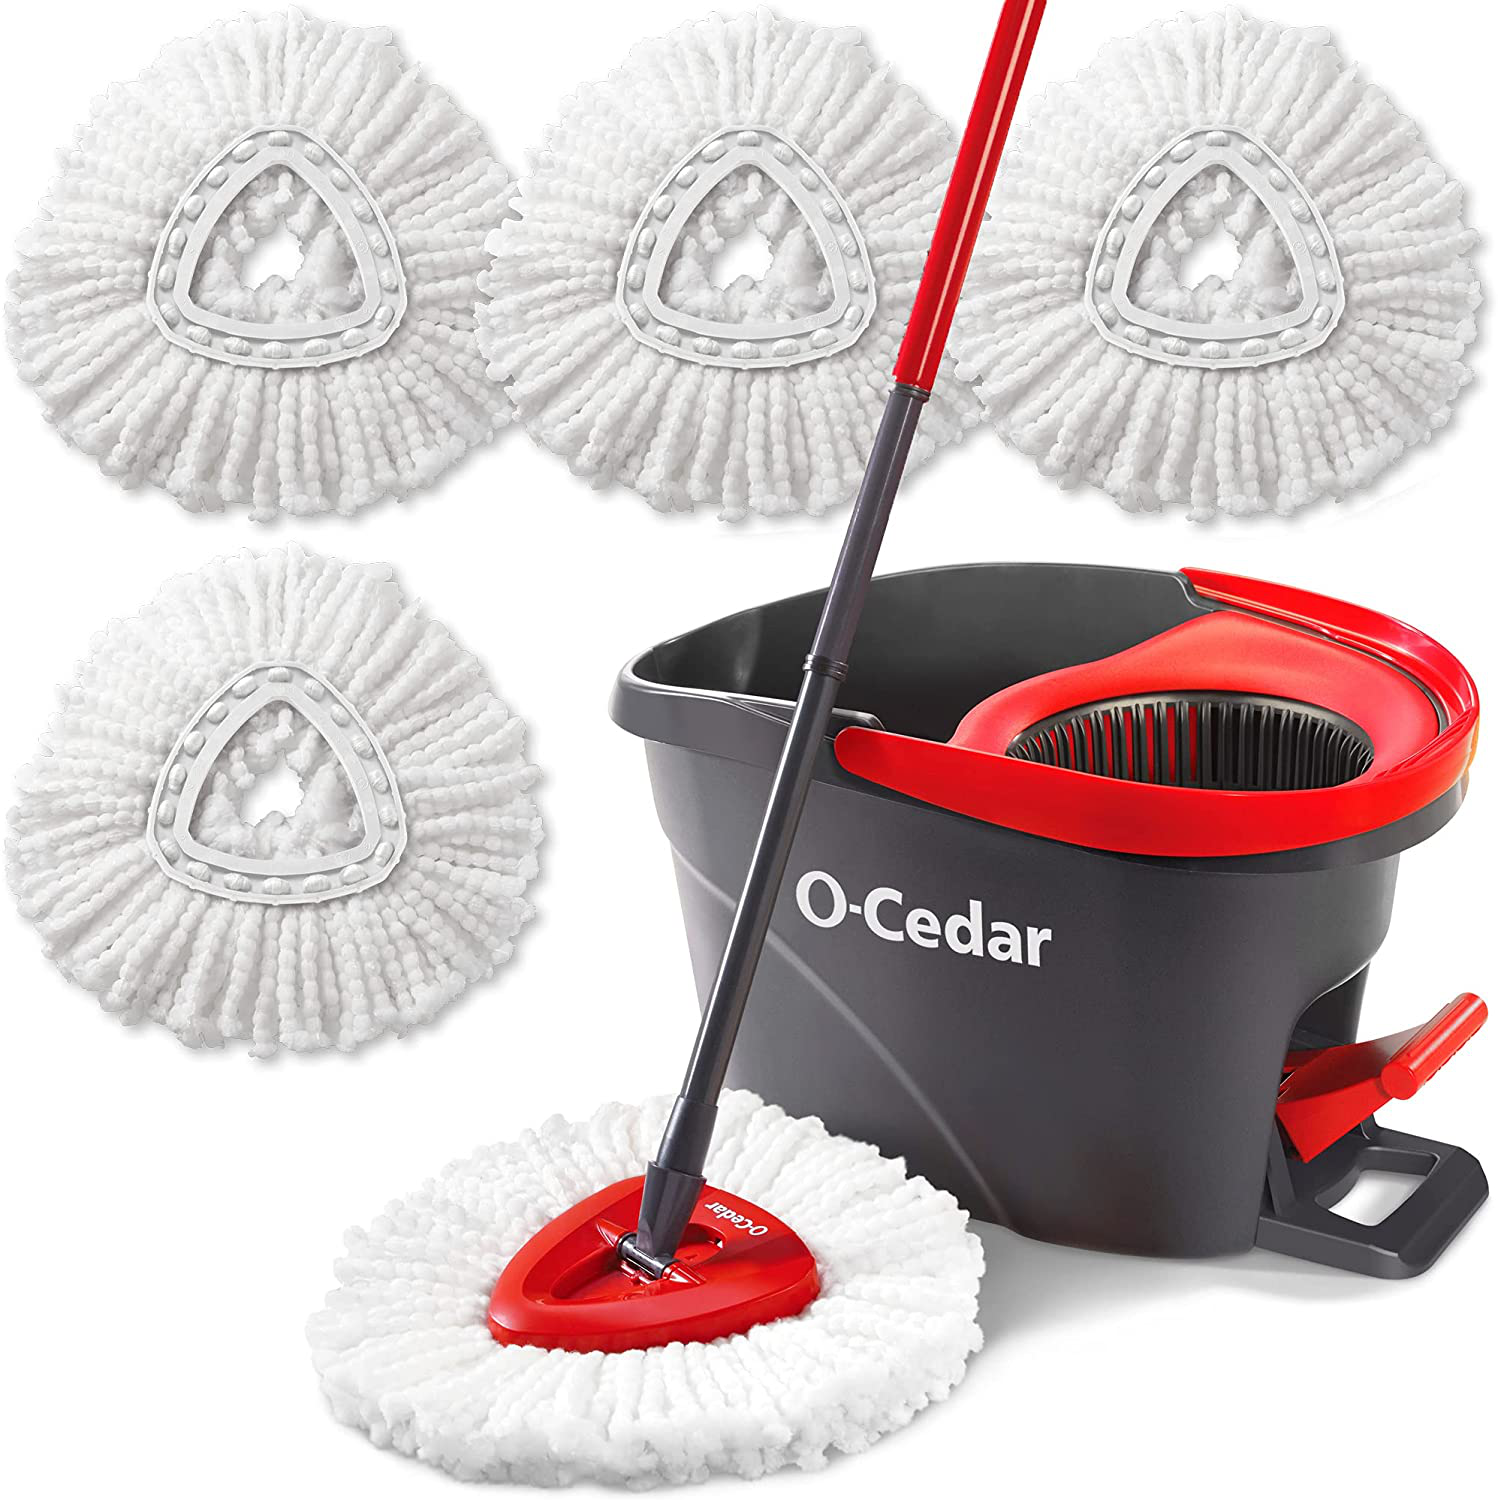 O-Cedar Easywring Microfiber Spin Mop, Bucket Floor Cleaning System